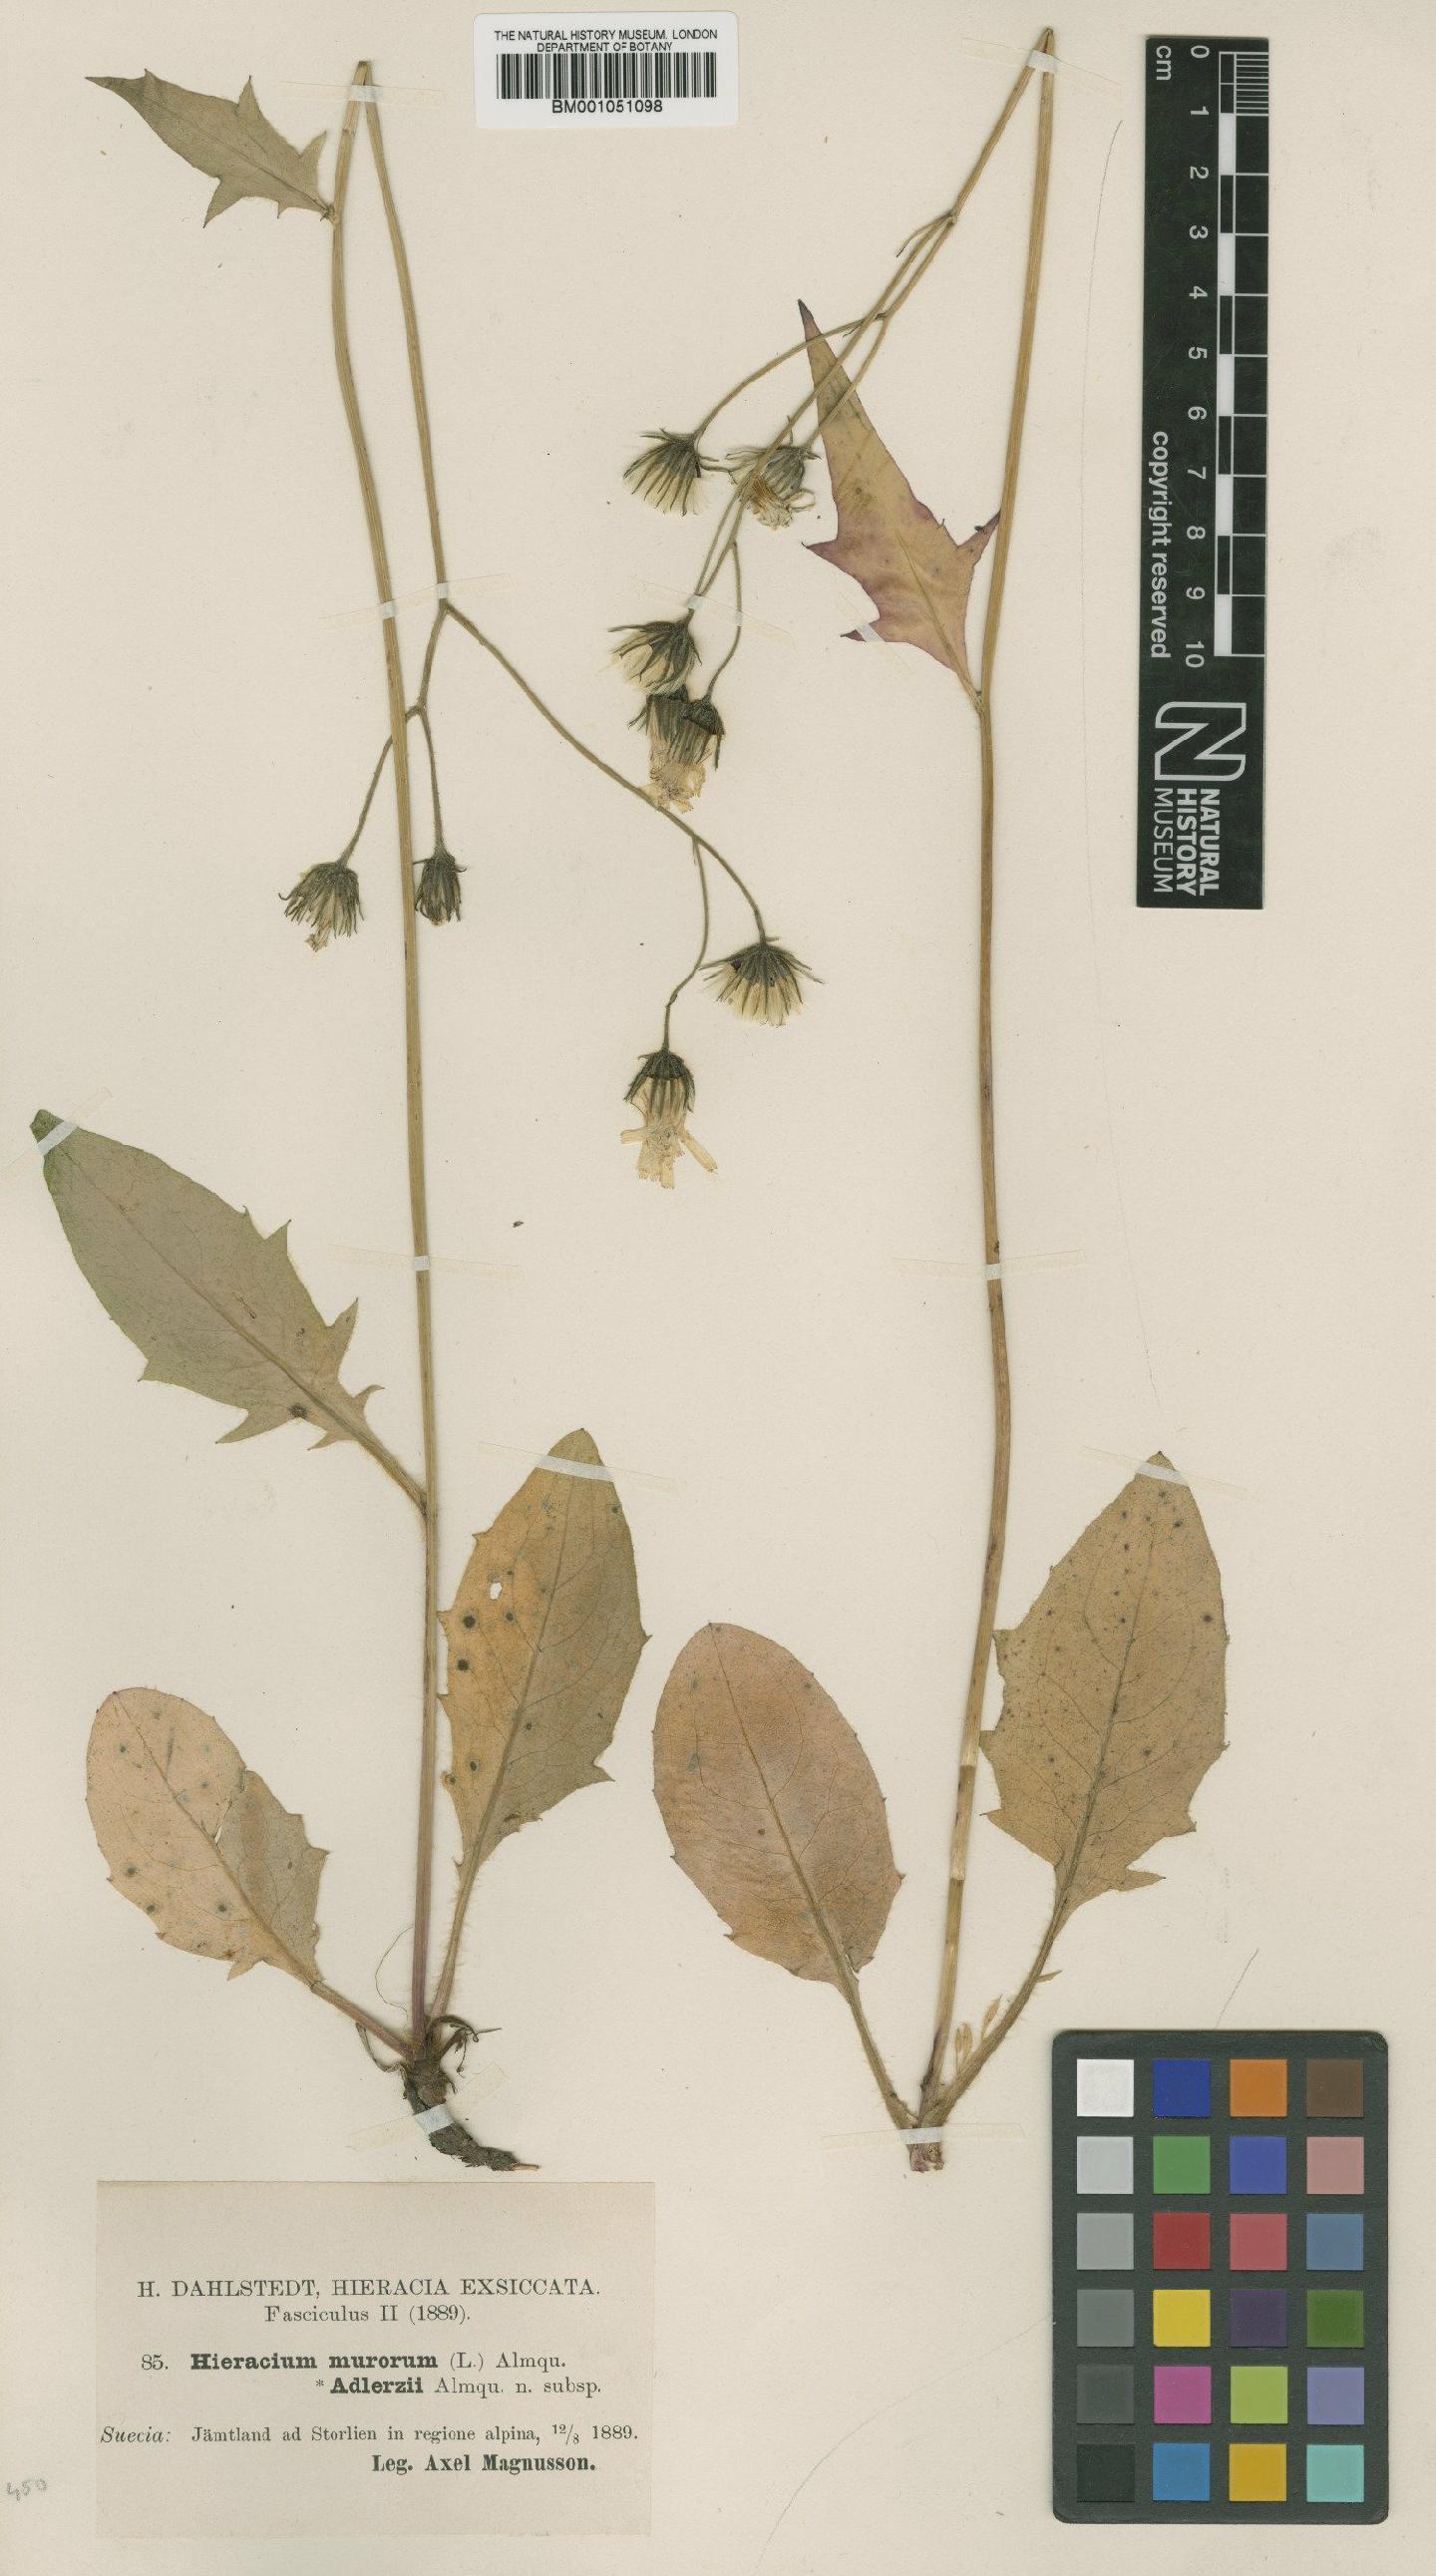 To NHMUK collection (Hieracium caesium subsp. adlerzii (F.Hanb.) Zahn; TYPE; NHMUK:ecatalogue:2421312)